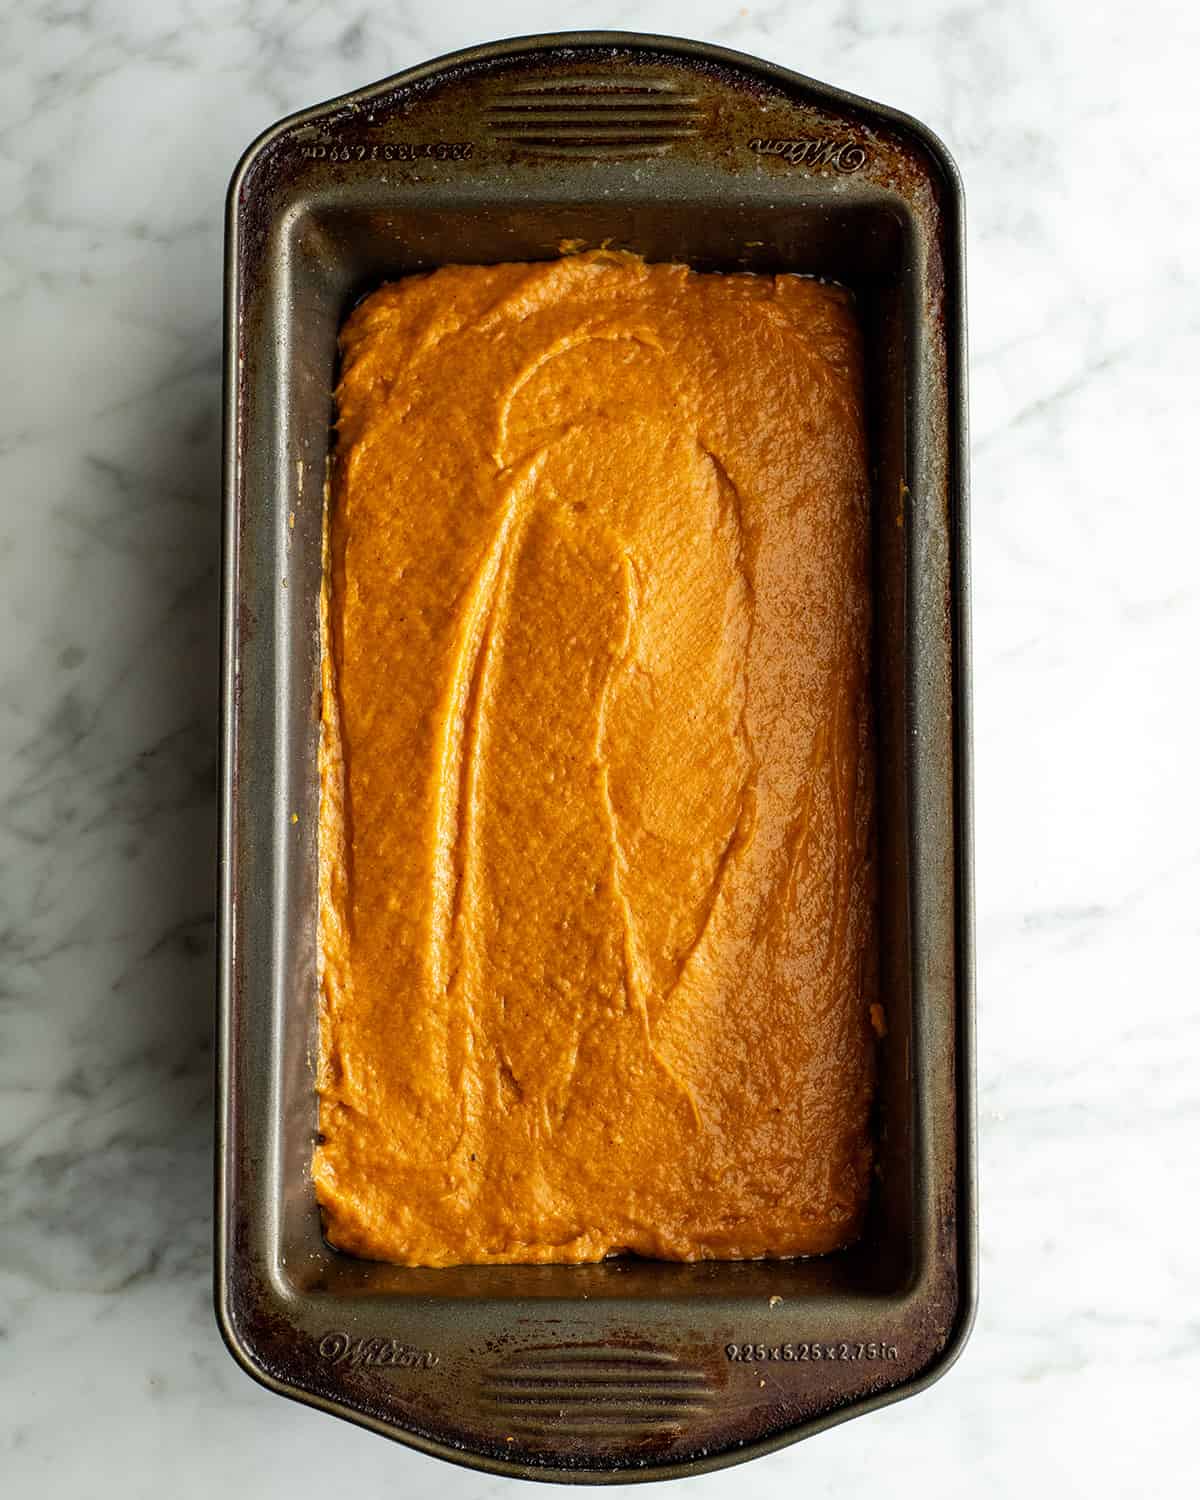 pumpkin bread batter in a baking pan before baking